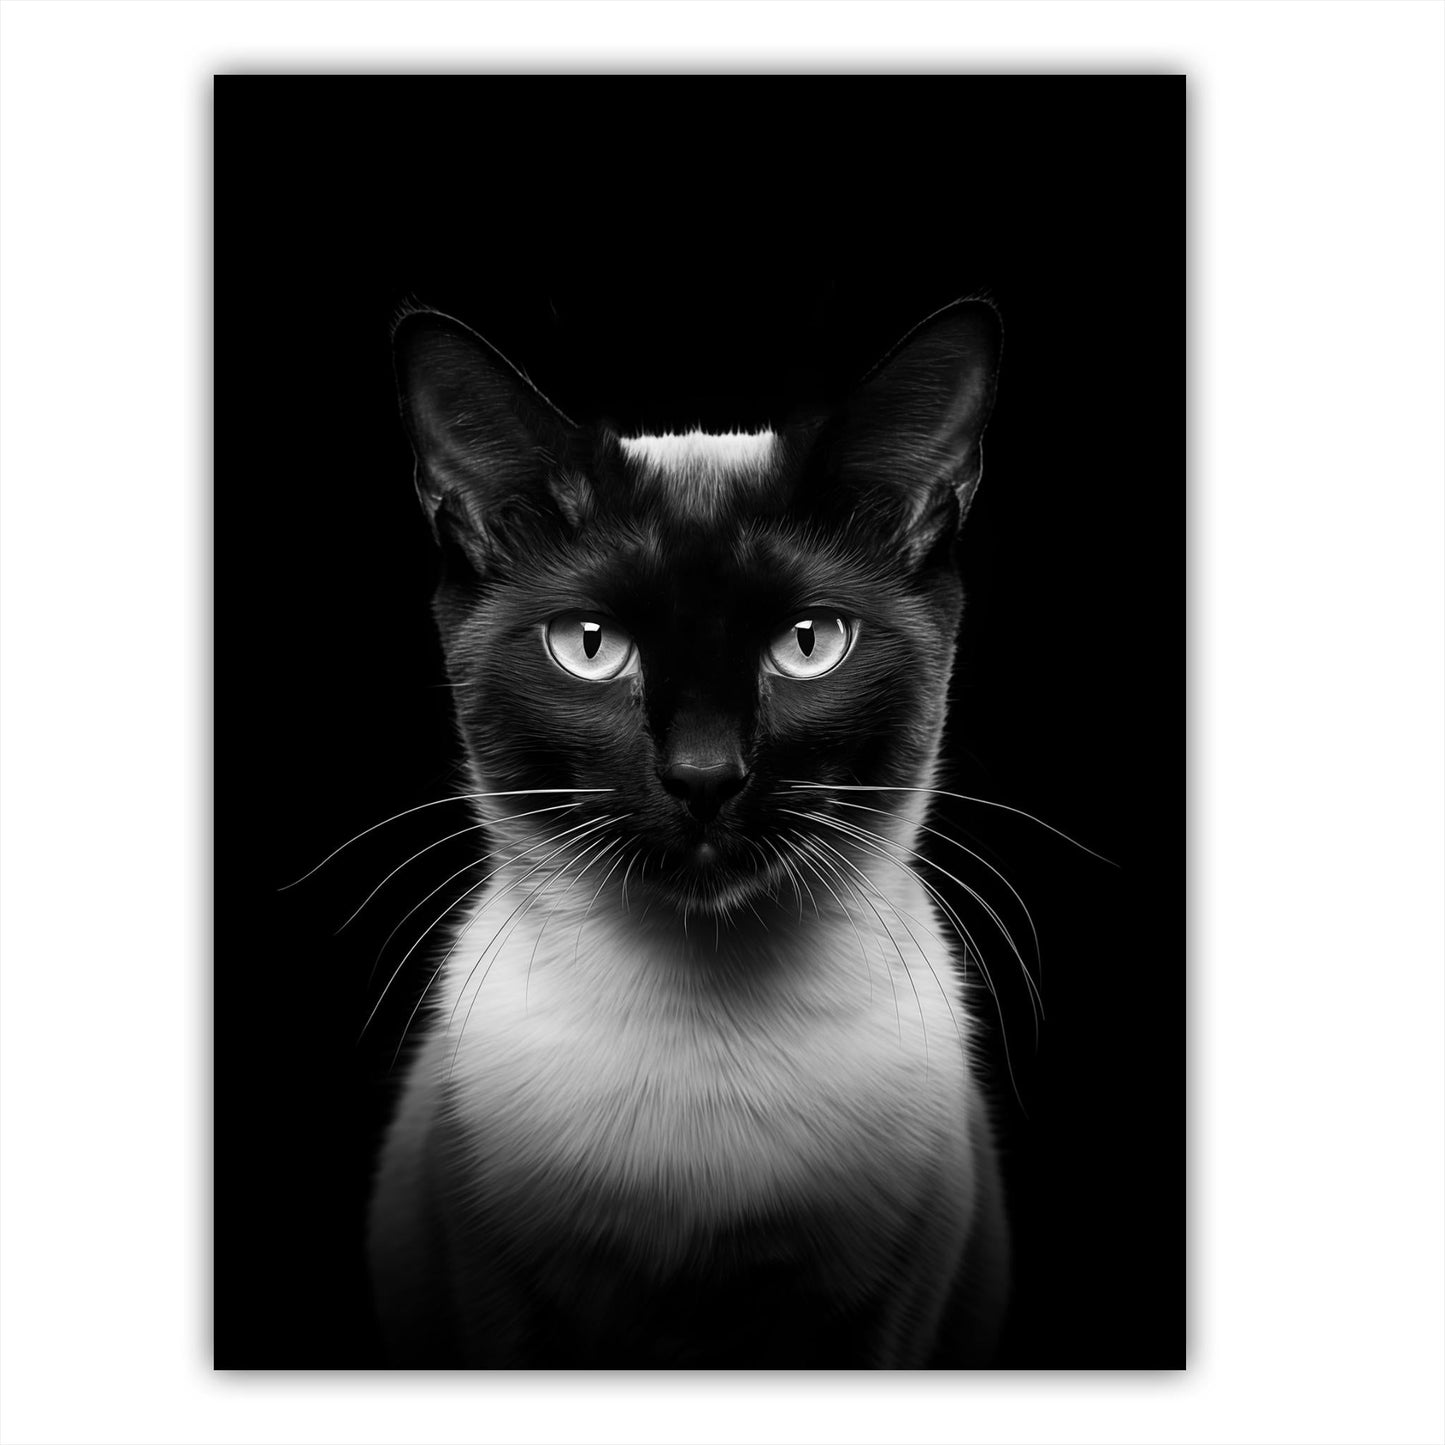 Cat - Siamese Portrait - Atka Inspirations